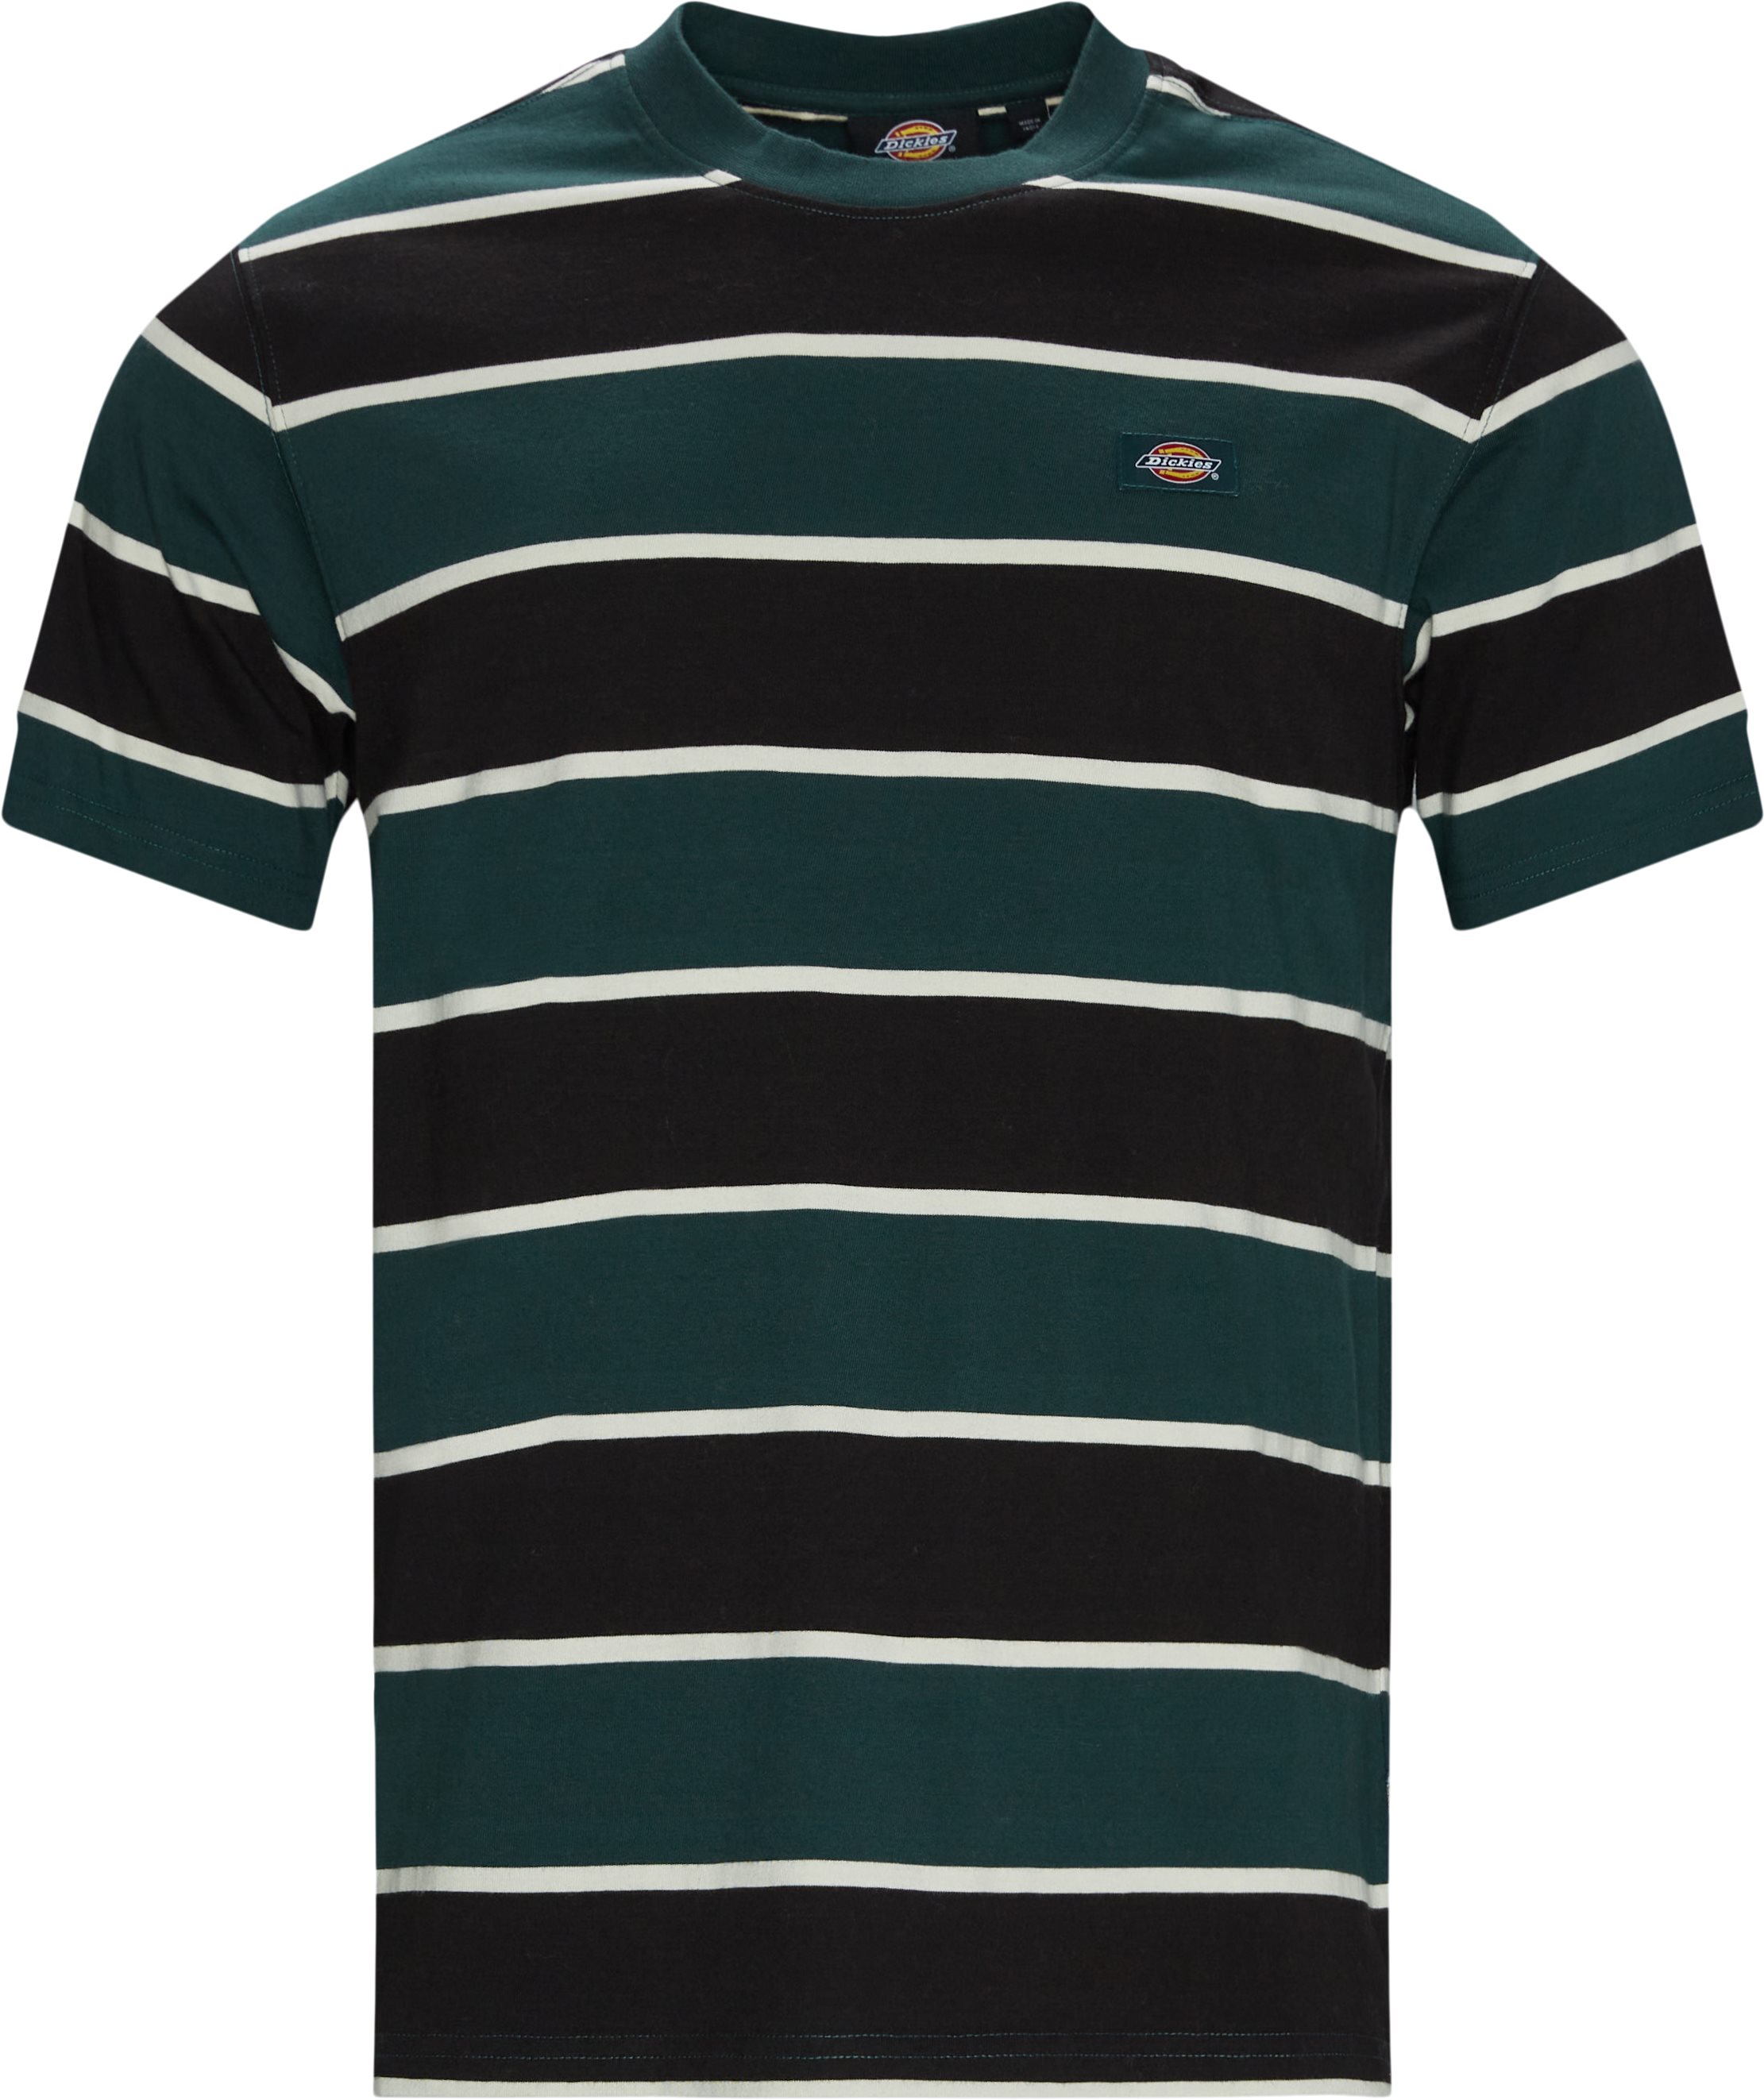 Oakhaven Tee - T-shirts - Regular fit - Green